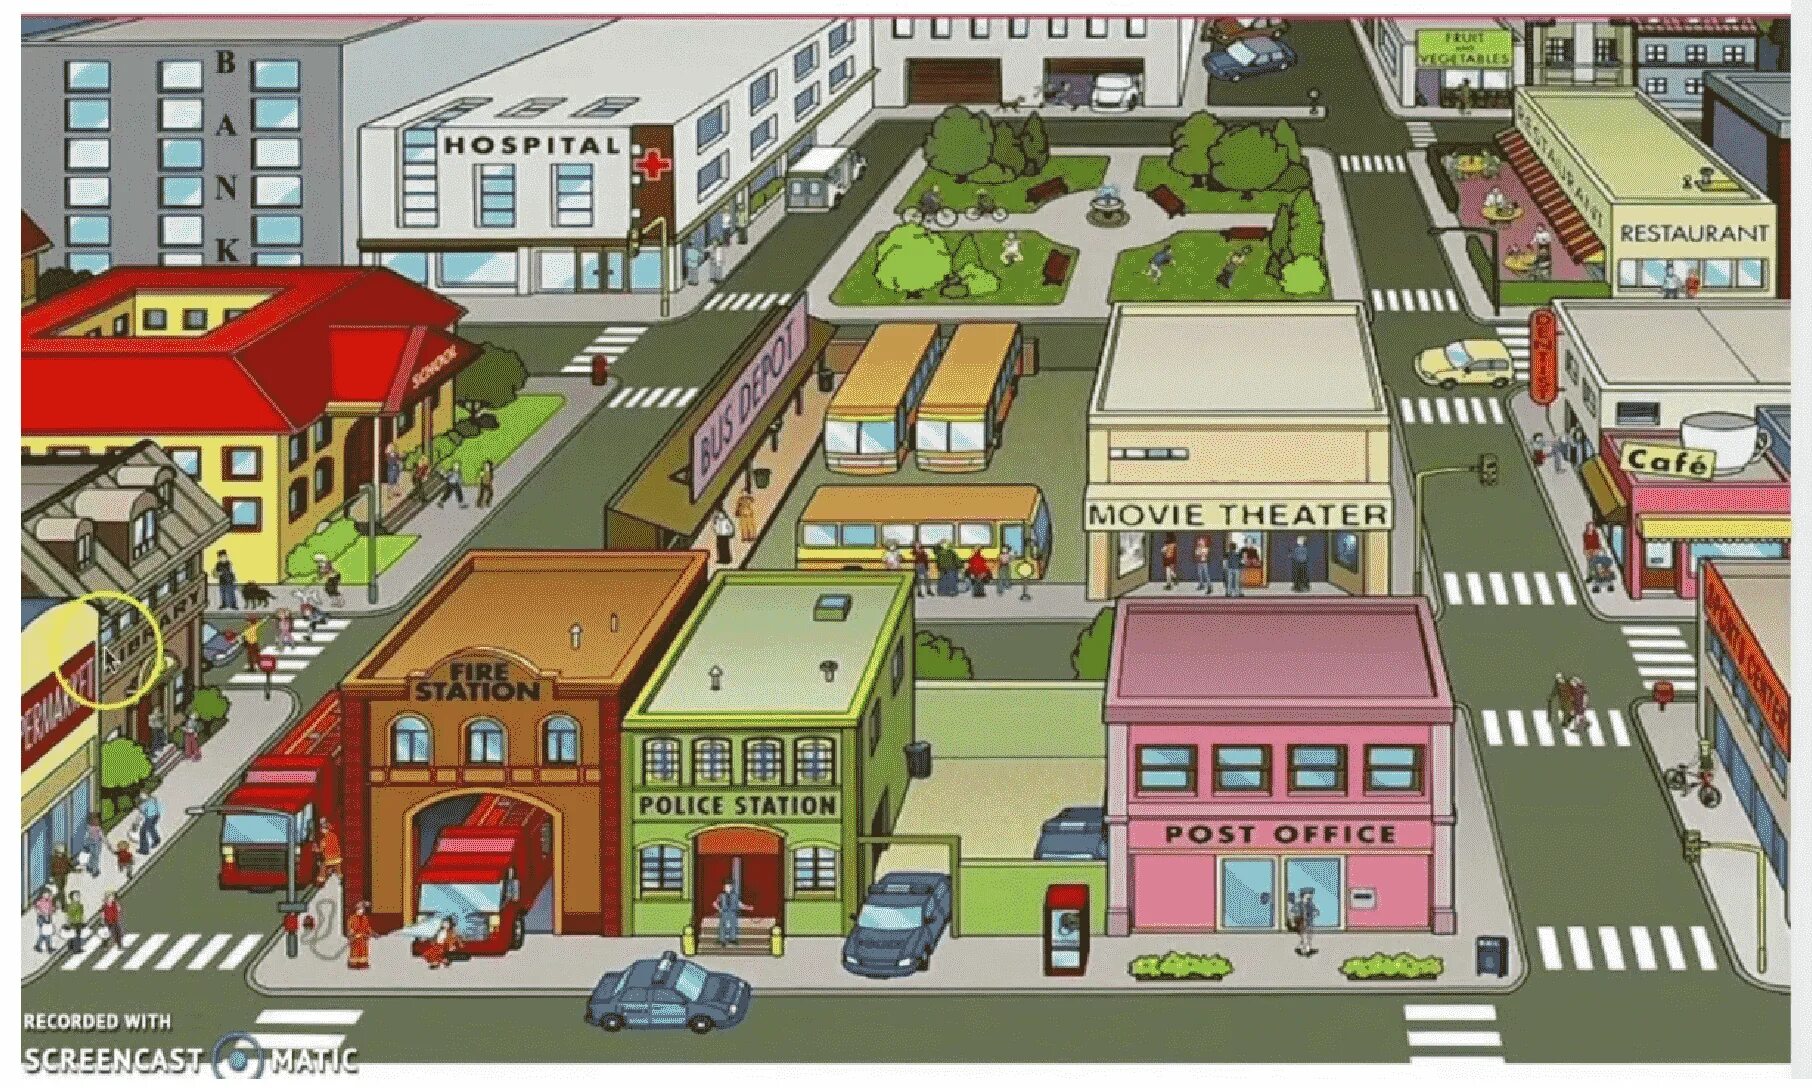 Are you going to the post office. Places in Town для детей. Картинка города для описания. План города для детей. Здания на английском тема город.